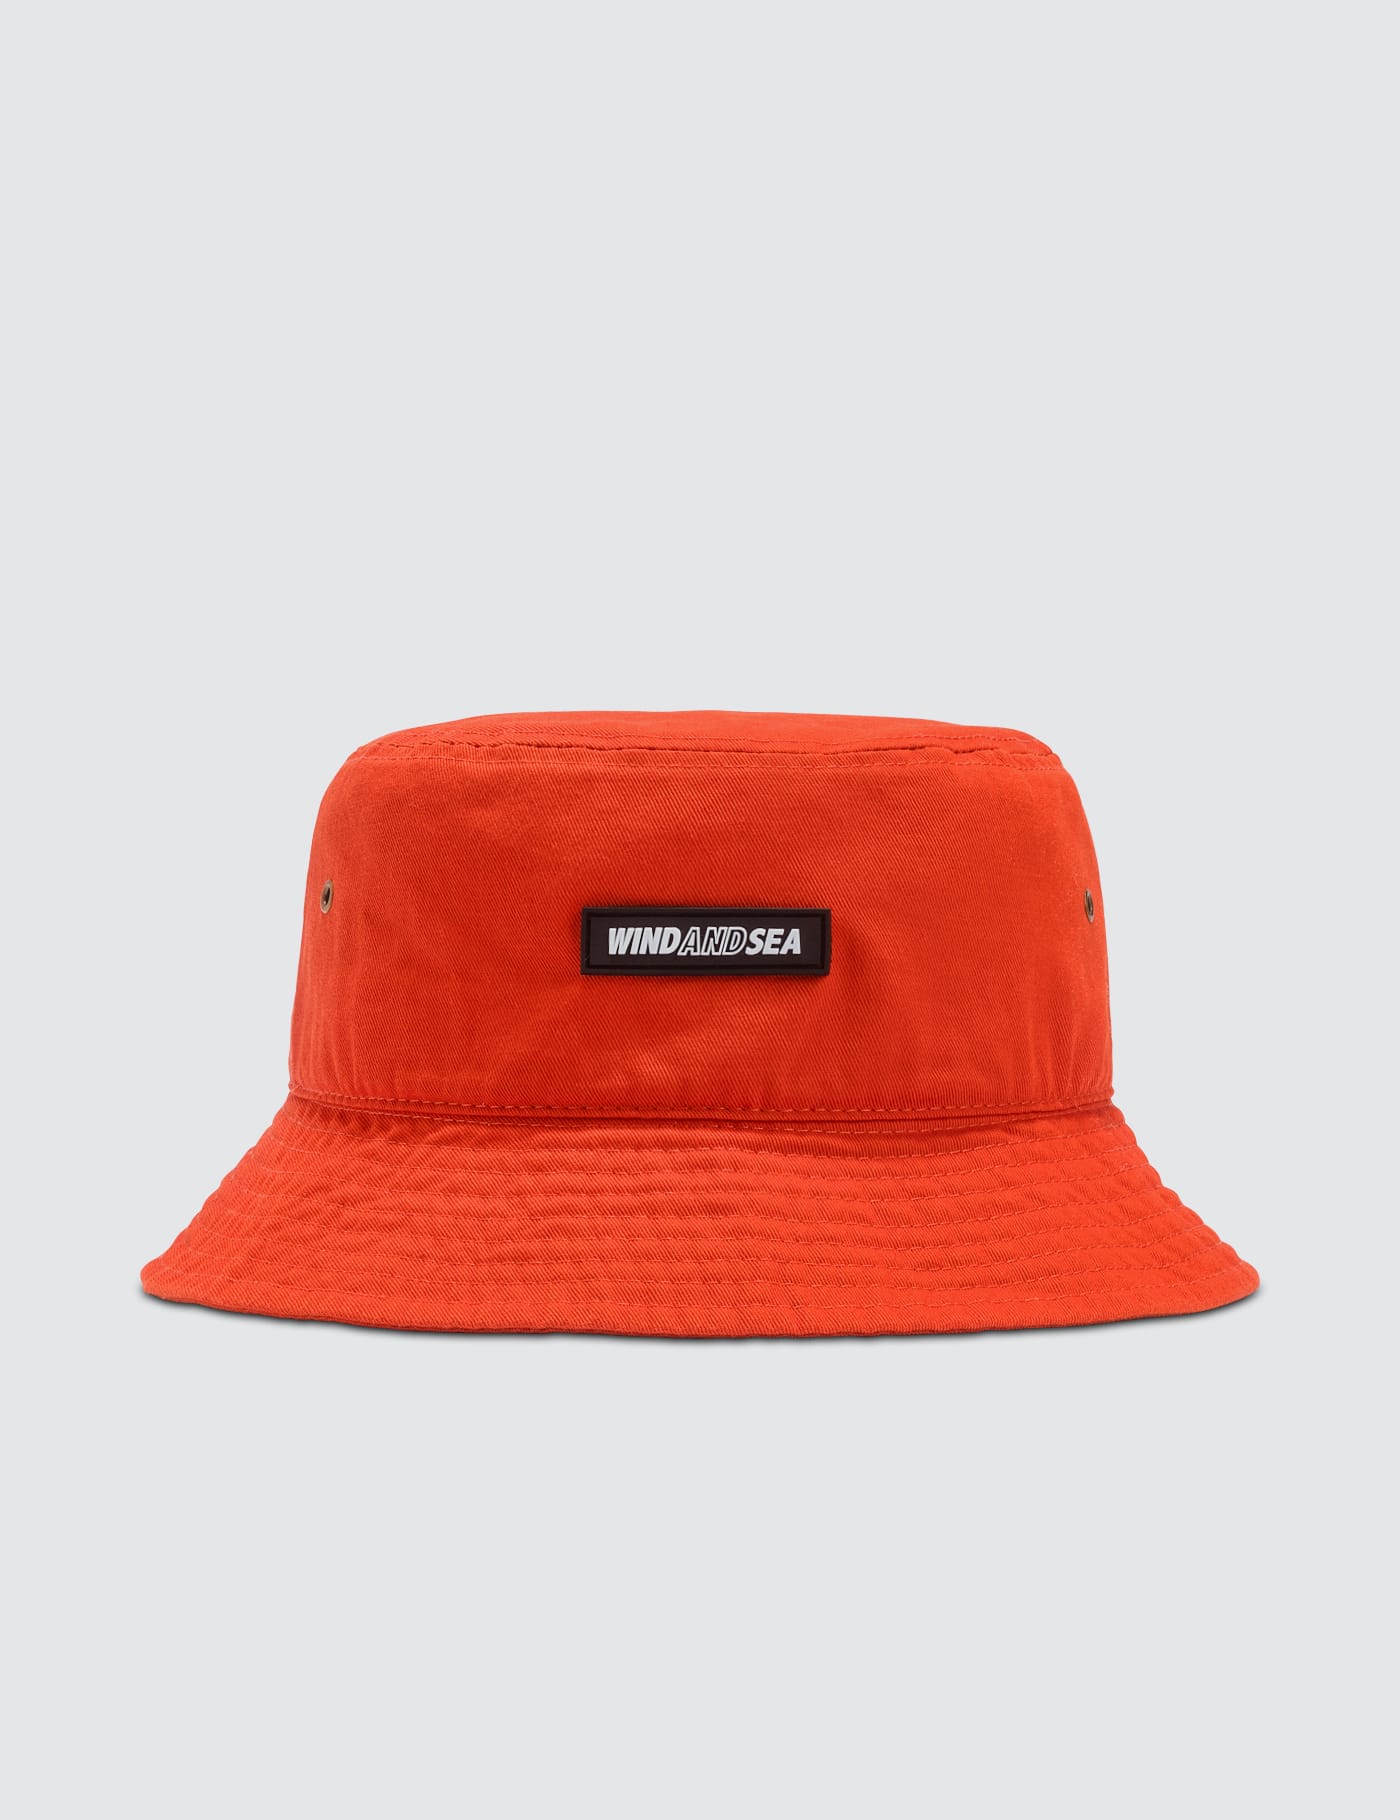 Wind And Sea - Bucket Hat | HBX - HYPEBEAST 為您搜羅全球潮流時尚品牌